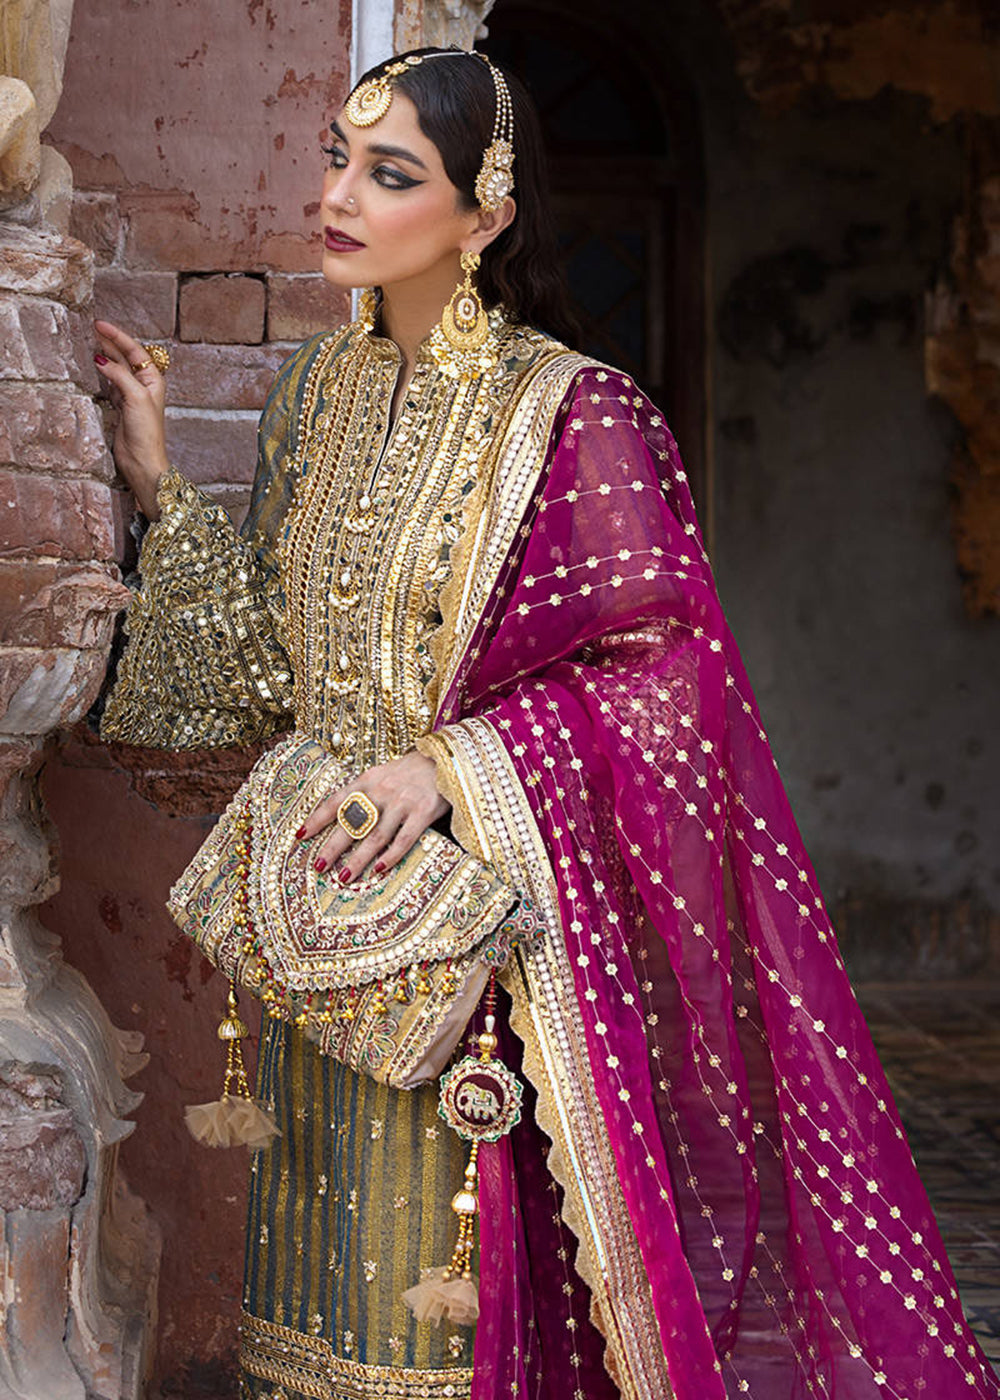 Buy Now Talpur Dynasty '23 - Unstitched Festive Vol. IV by MNR - NAWAB SAHIBA Online at Empress Online in USA, UK, Canada & Worldwide at Empress Clothing.